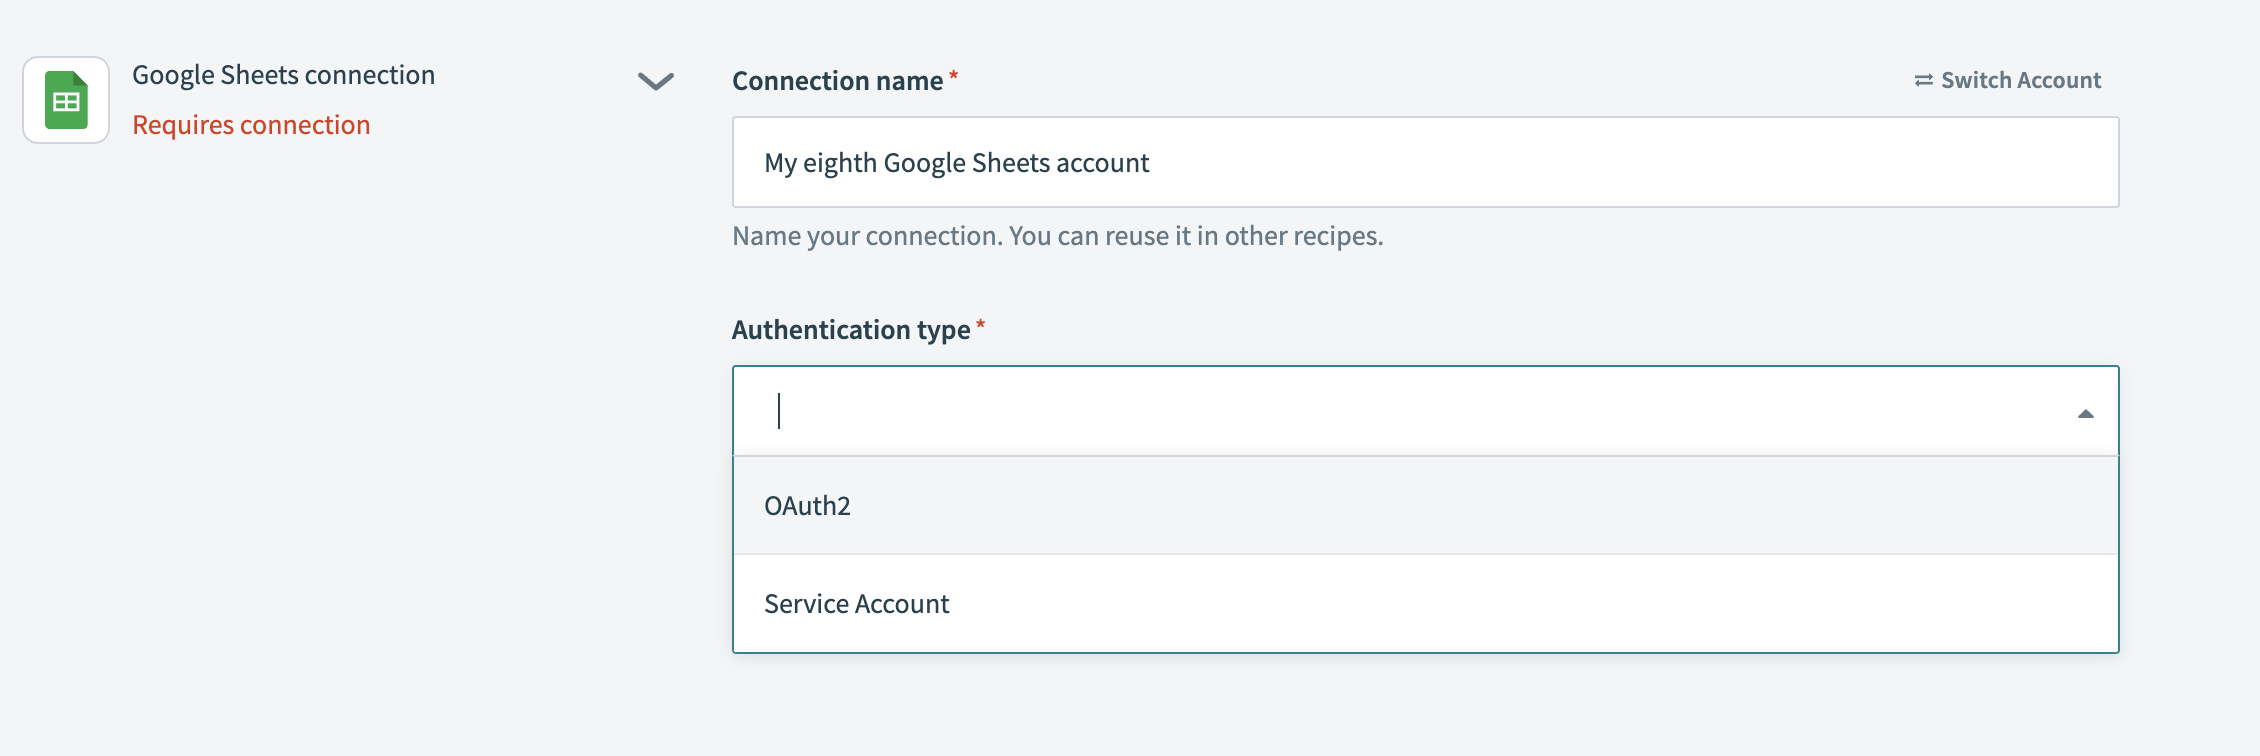 Configuring Google Sheet connection